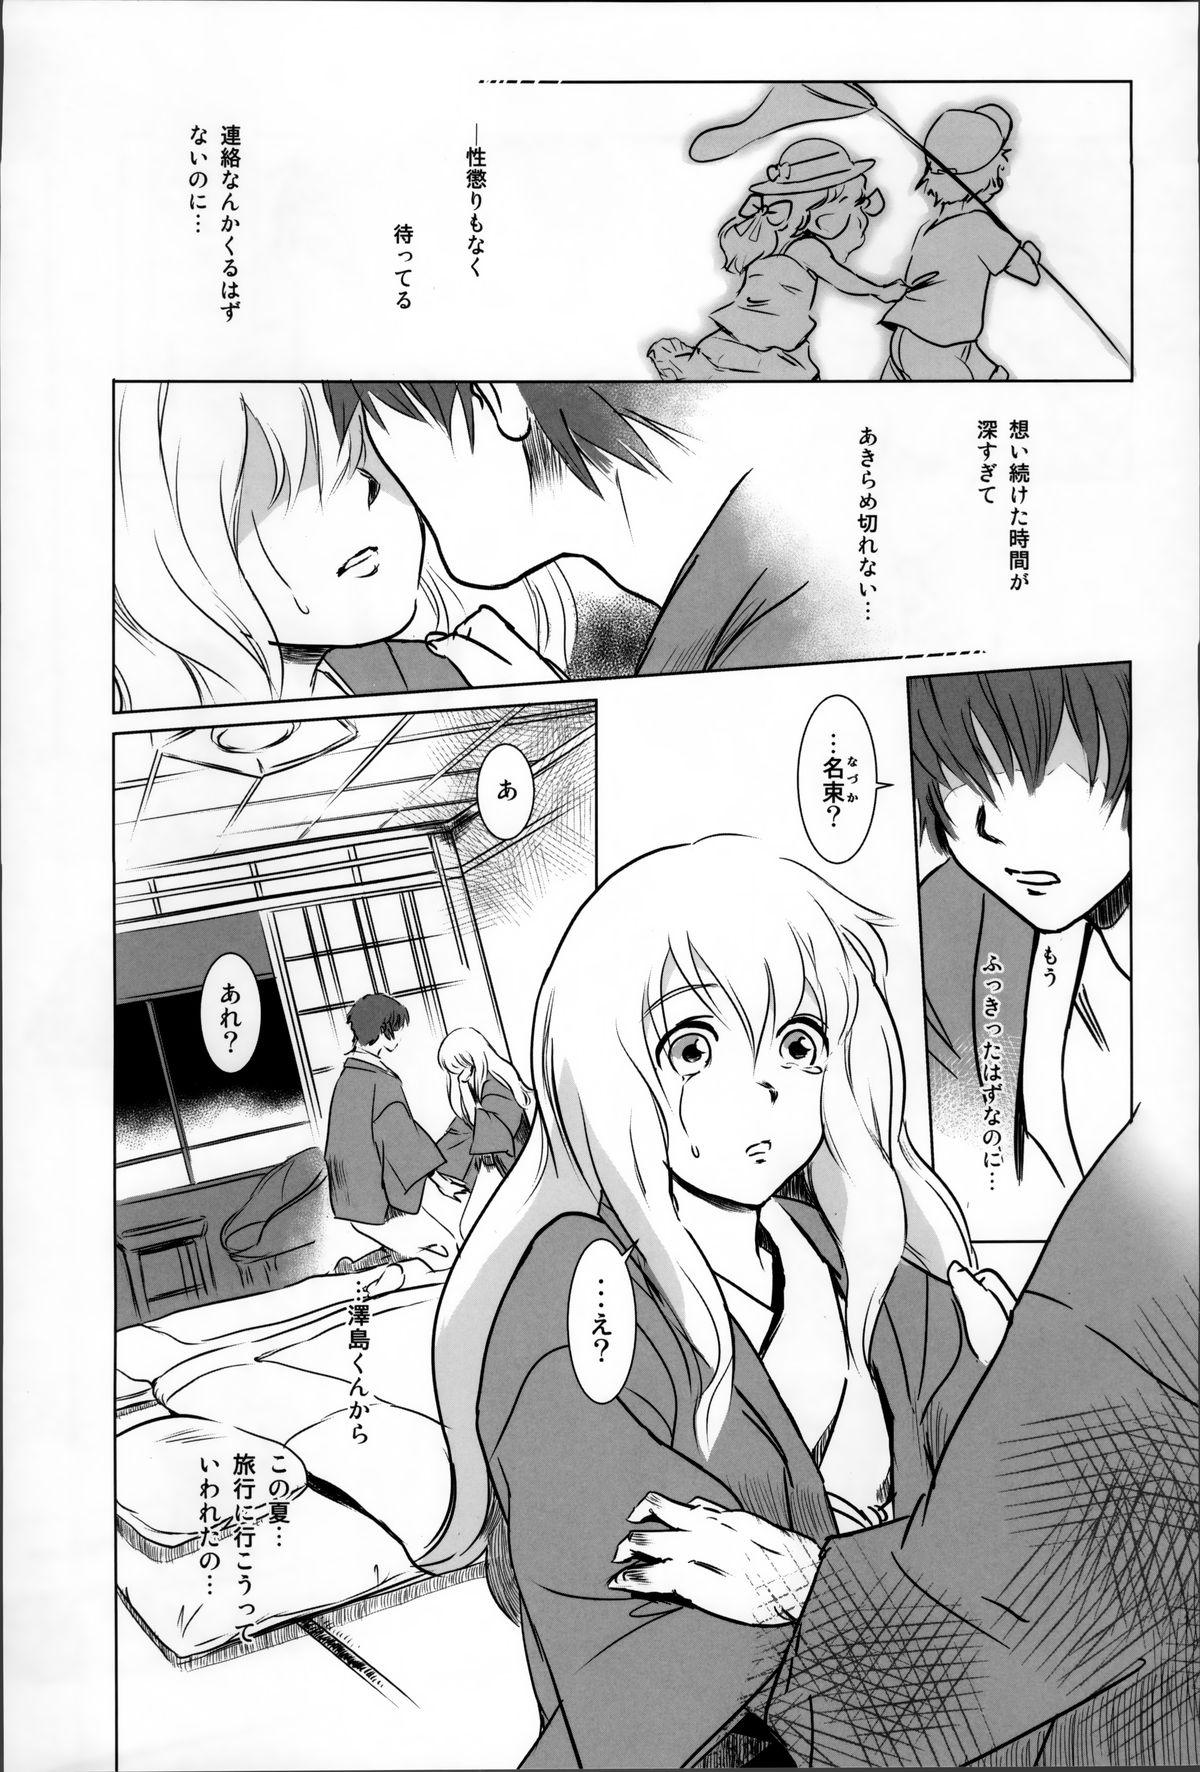 Wam Story of the 'N' Situation - Situation#2 Kokoro Utsuri Groping - Page 3